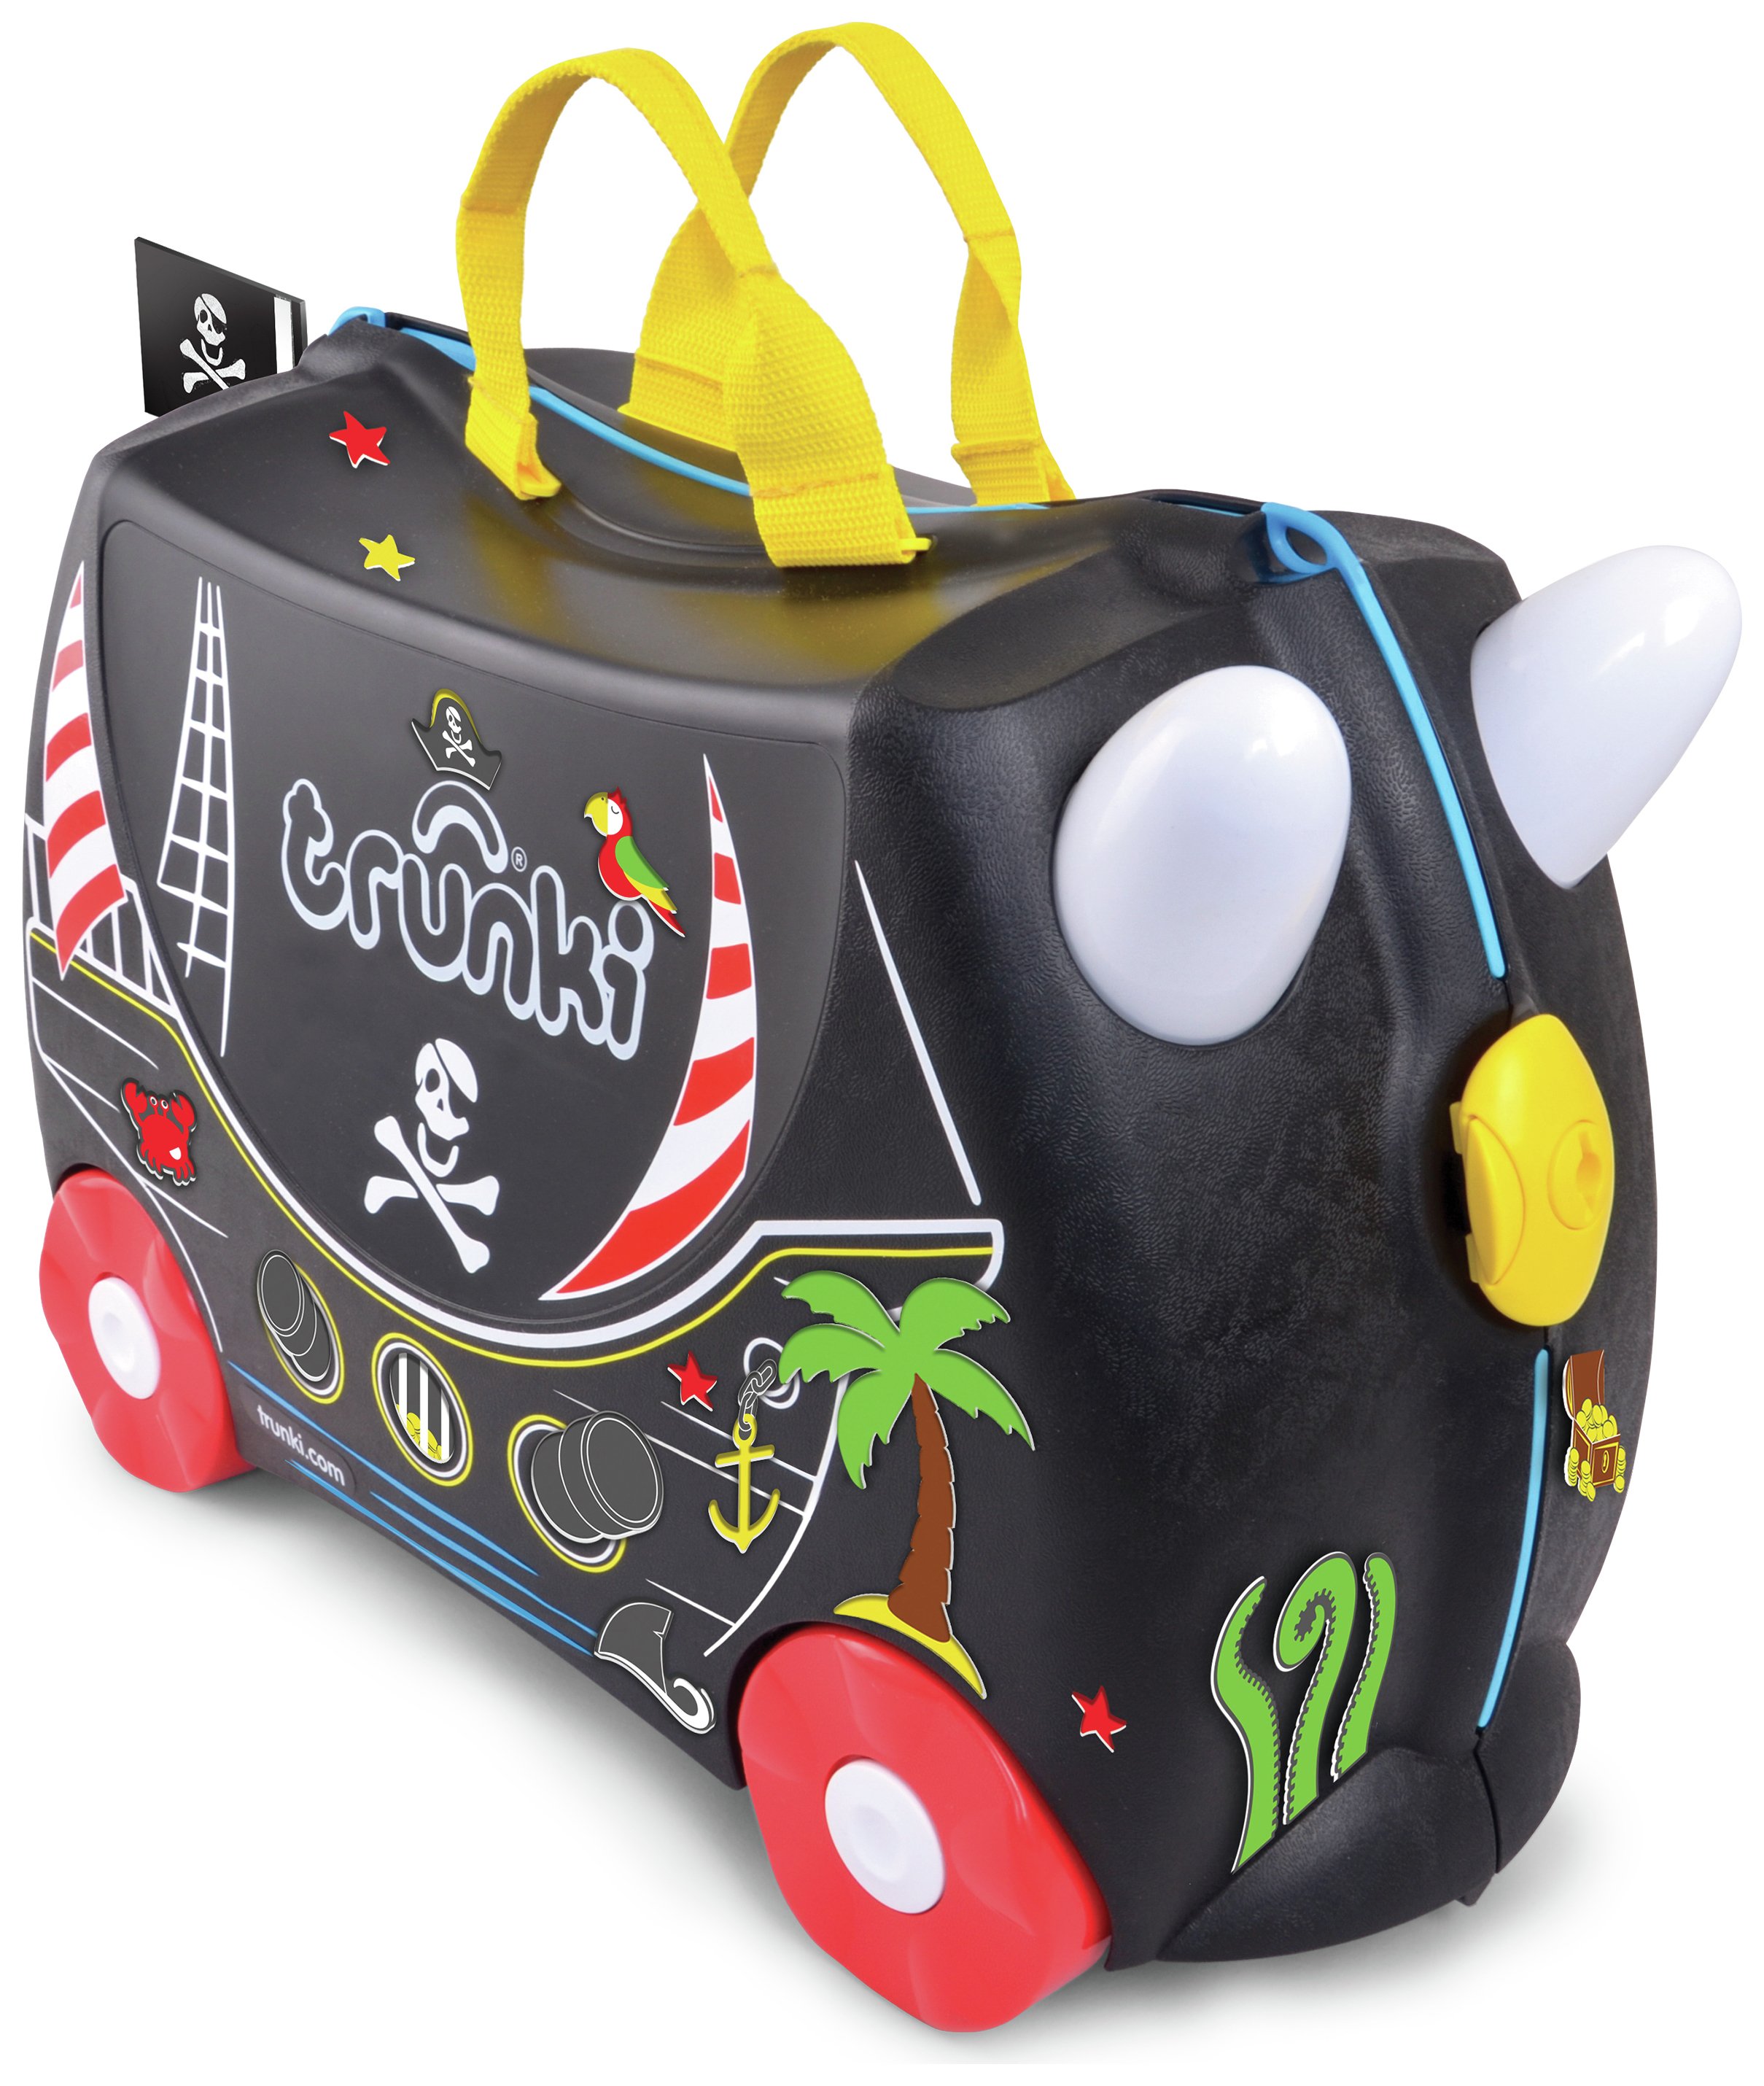 Trunki Pedro Pirate 4 Wheel Hard Ride On Suitcase - Black